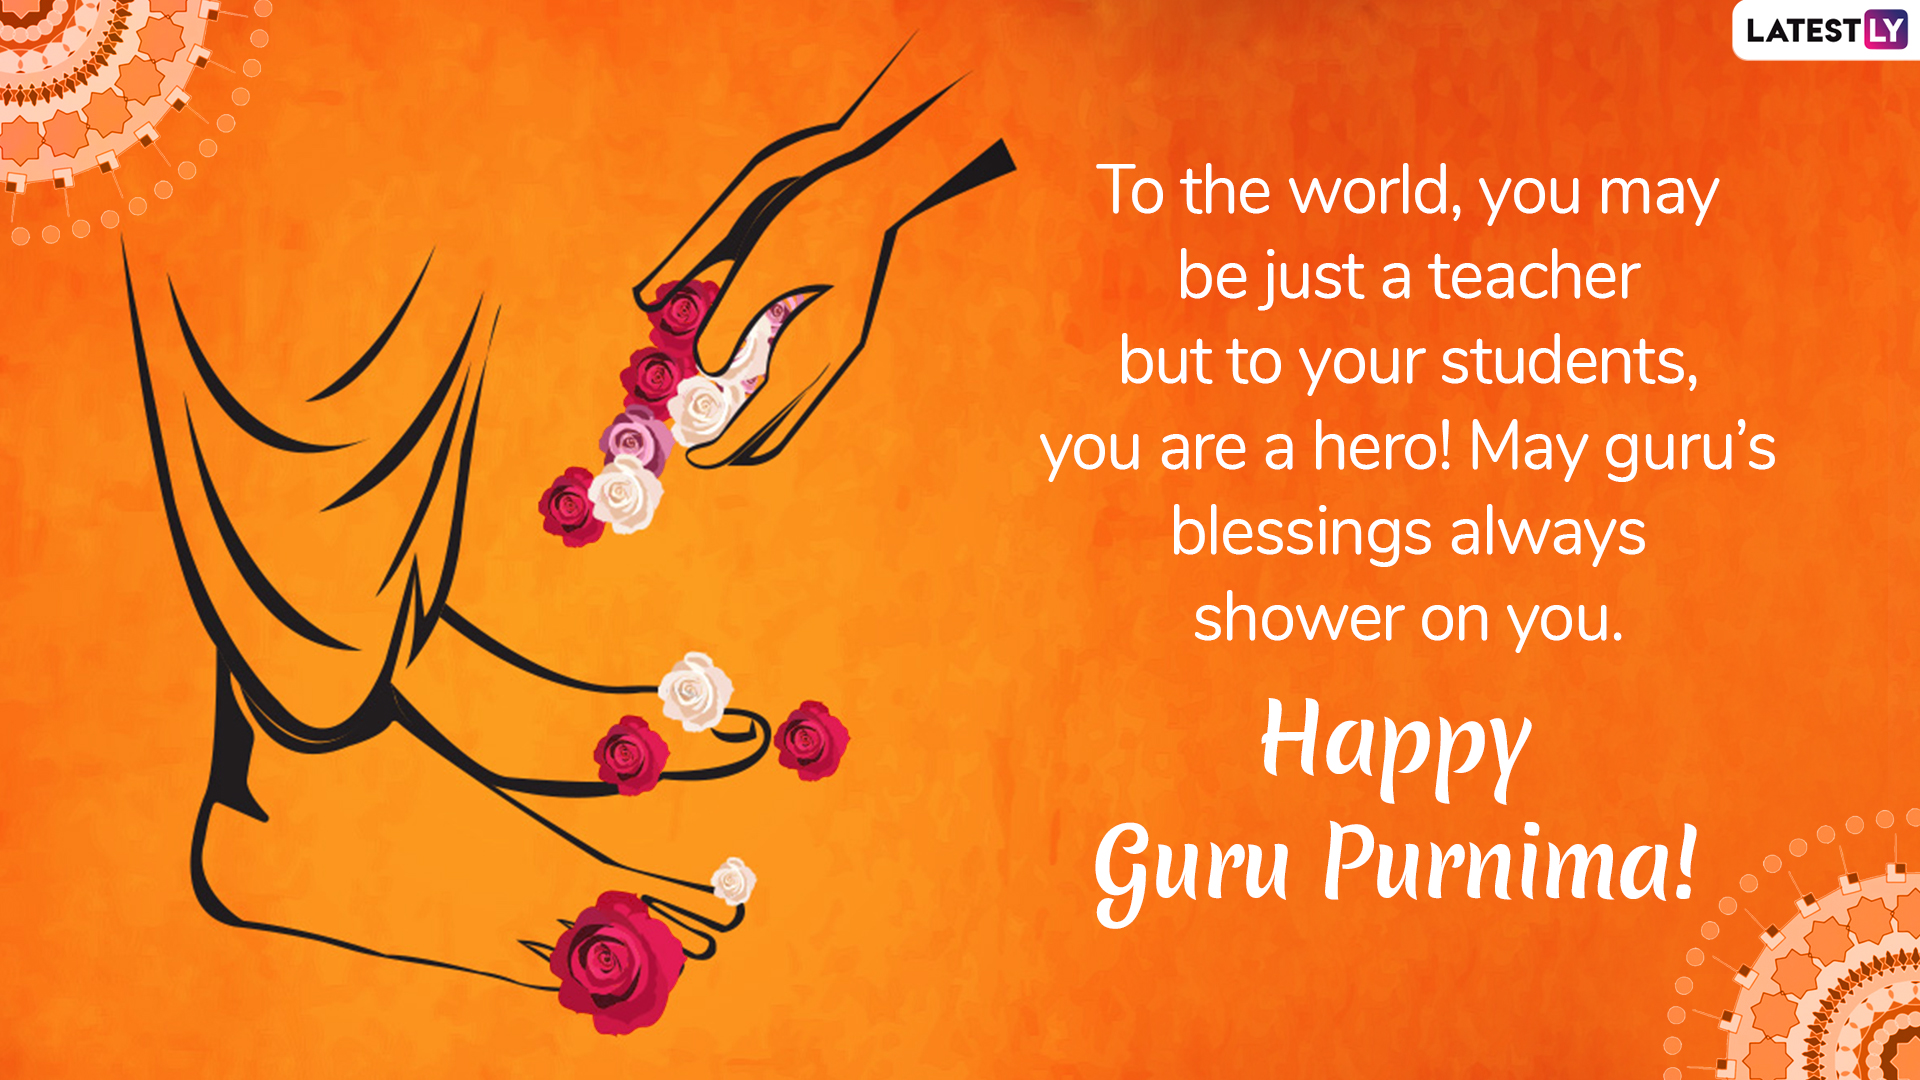 20+ Best Wishes, Images, Quotes, on Guru Purnima